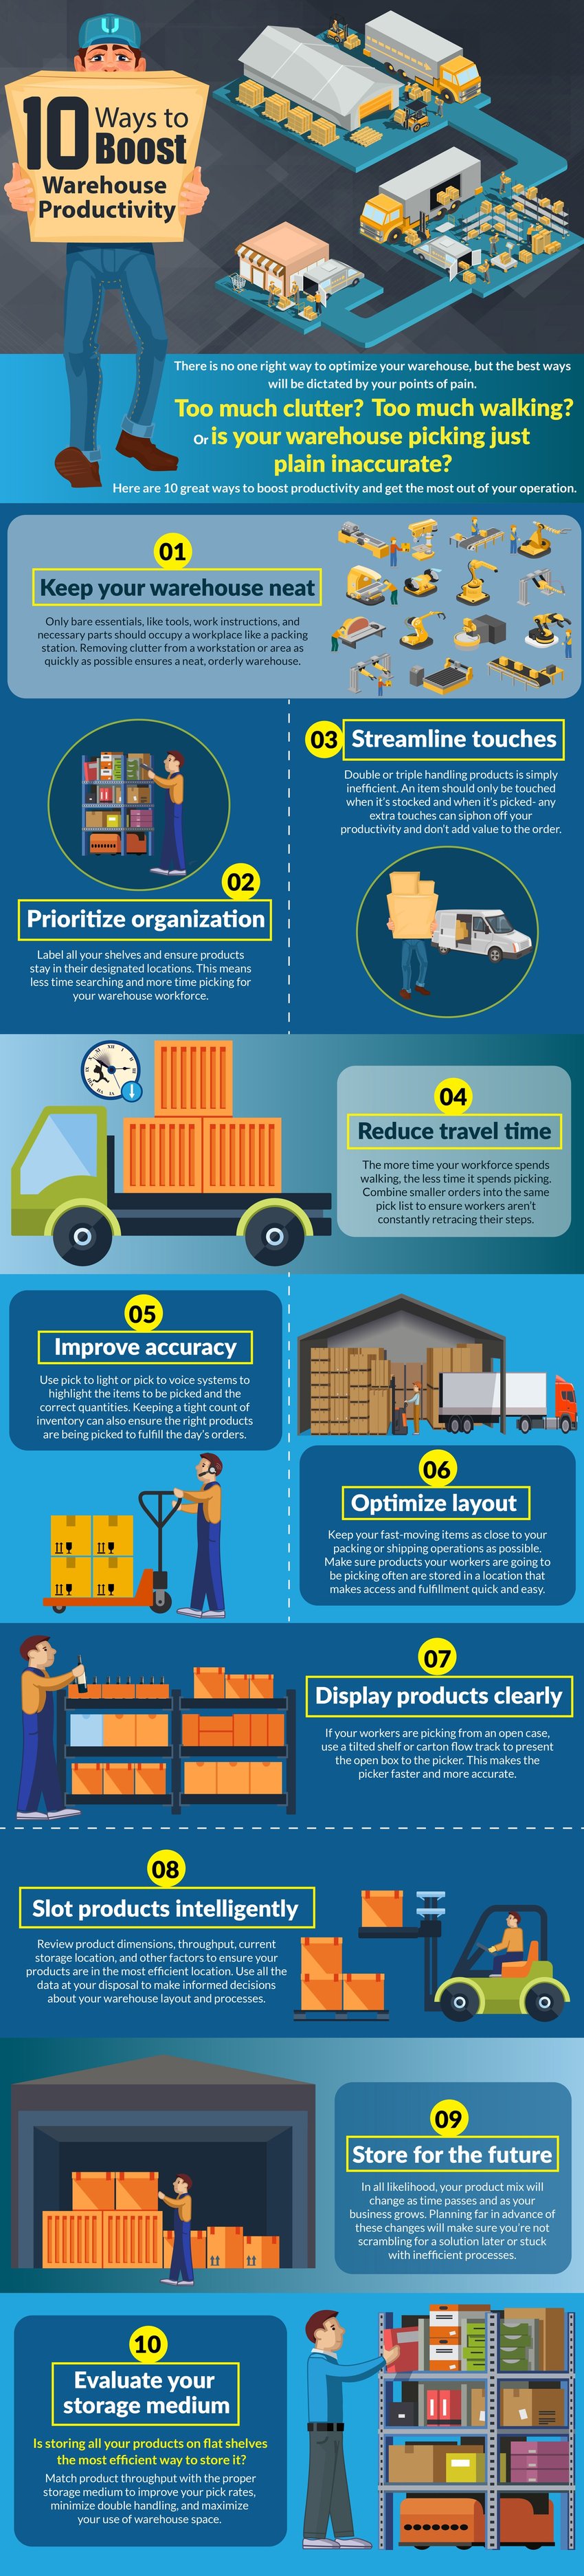 10-ways-to-boost-warehouse-productivity